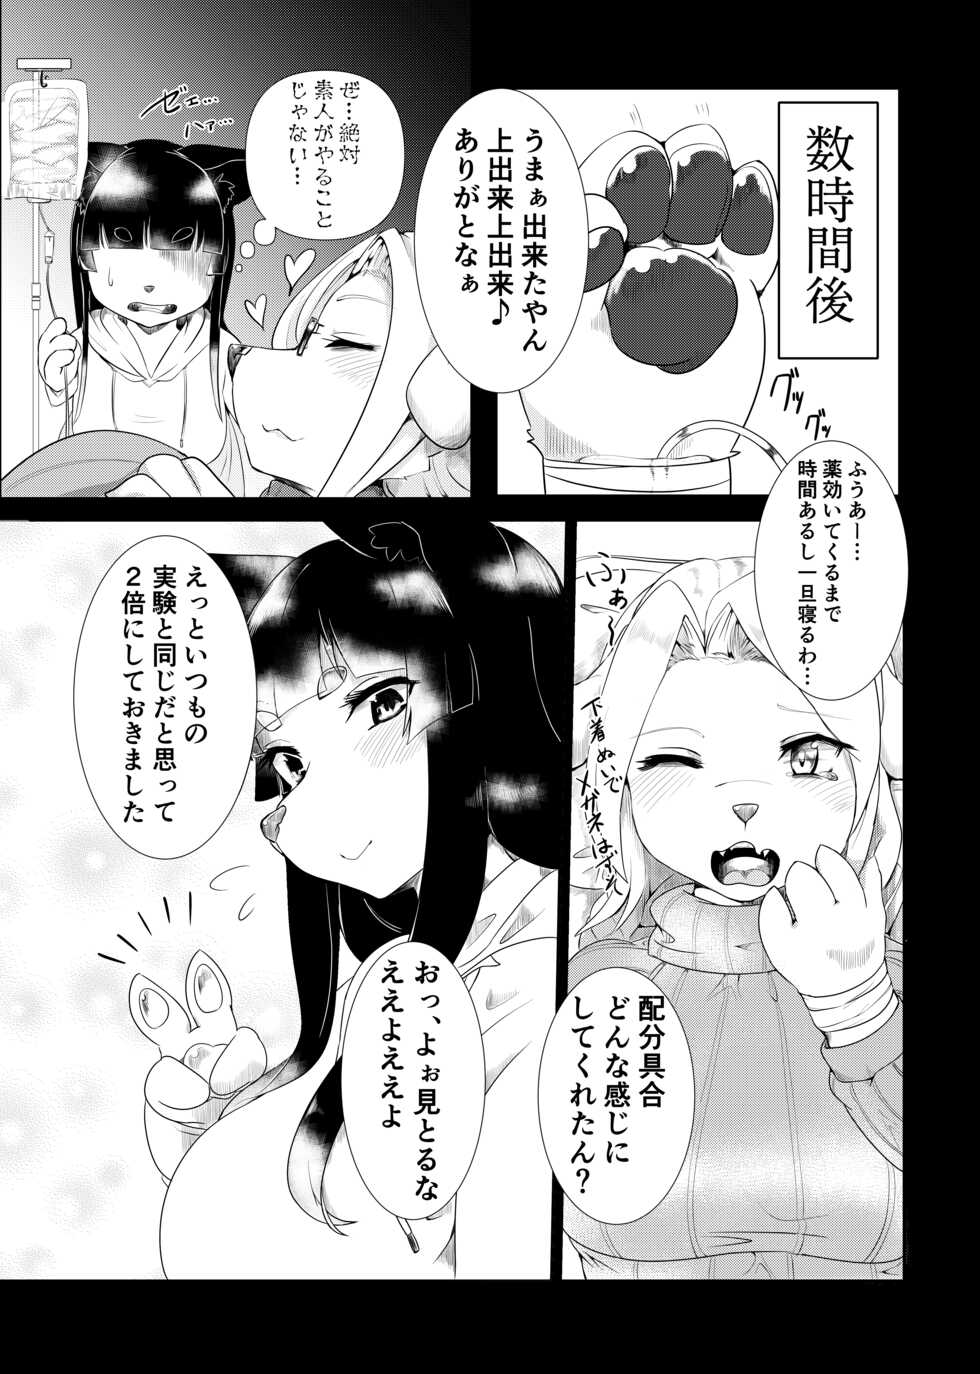 [Shikibe Tsuko] Fur pre in -Spawning Dog- - Page 4